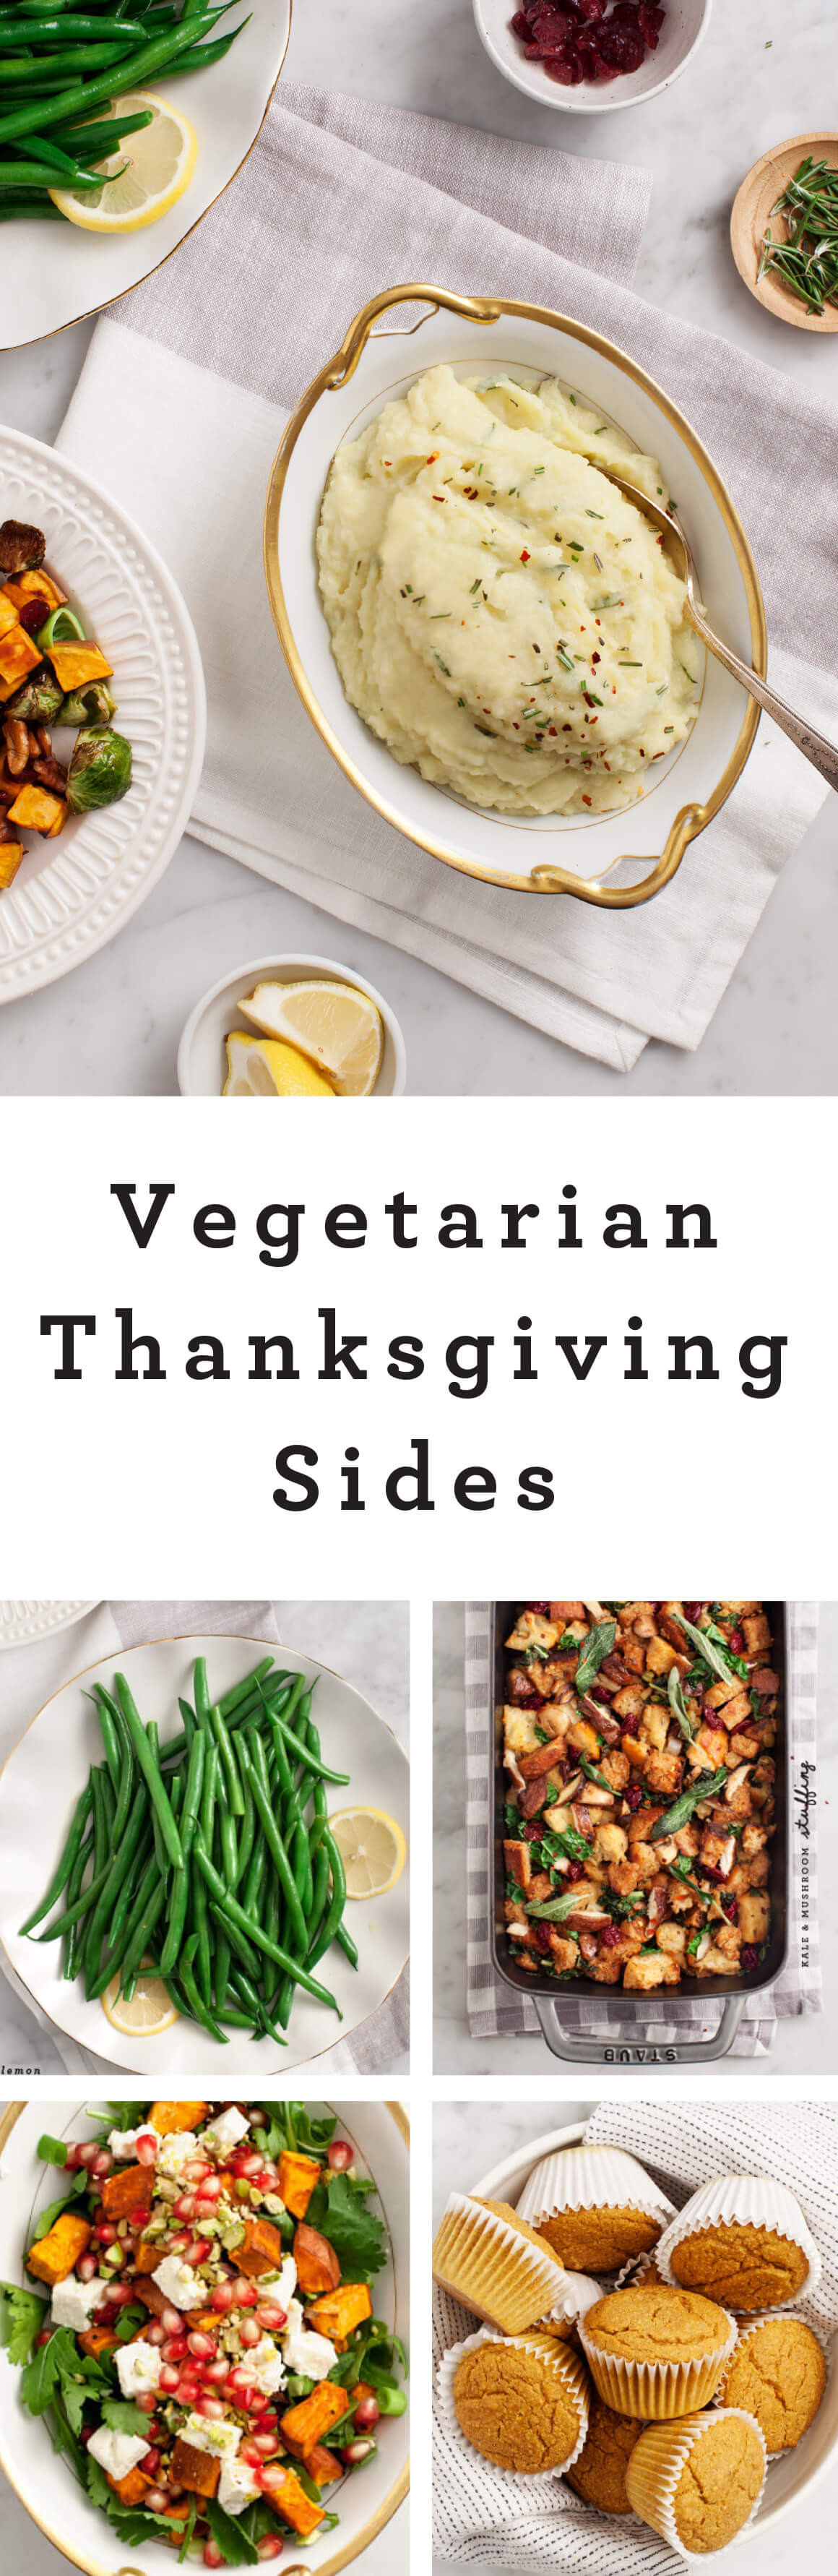 Vegetarian Sides For Thanksgiving
 Ve arian Thanksgiving Sides Love and Lemons